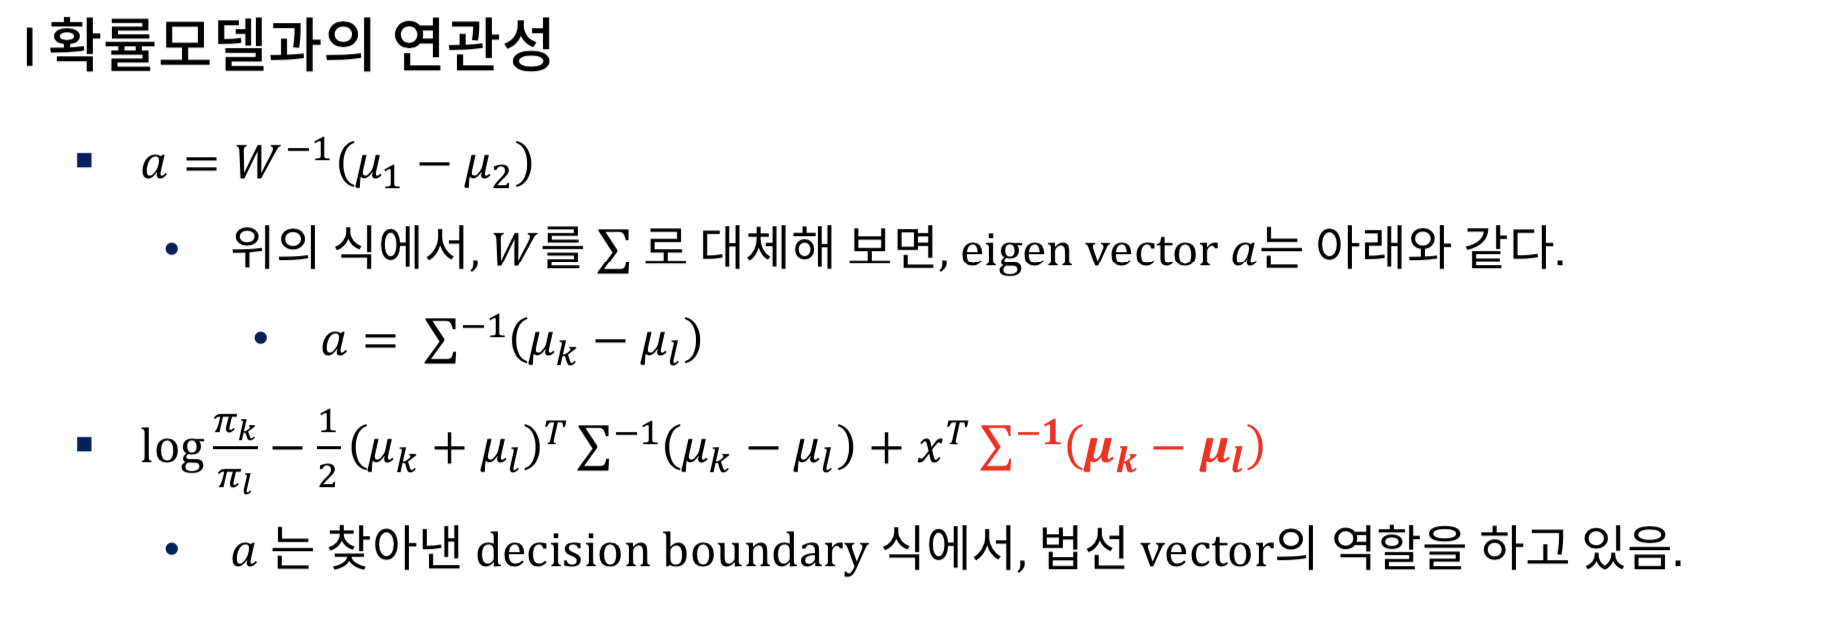 LDA의 decision boundary에서 eigen vector의 역할